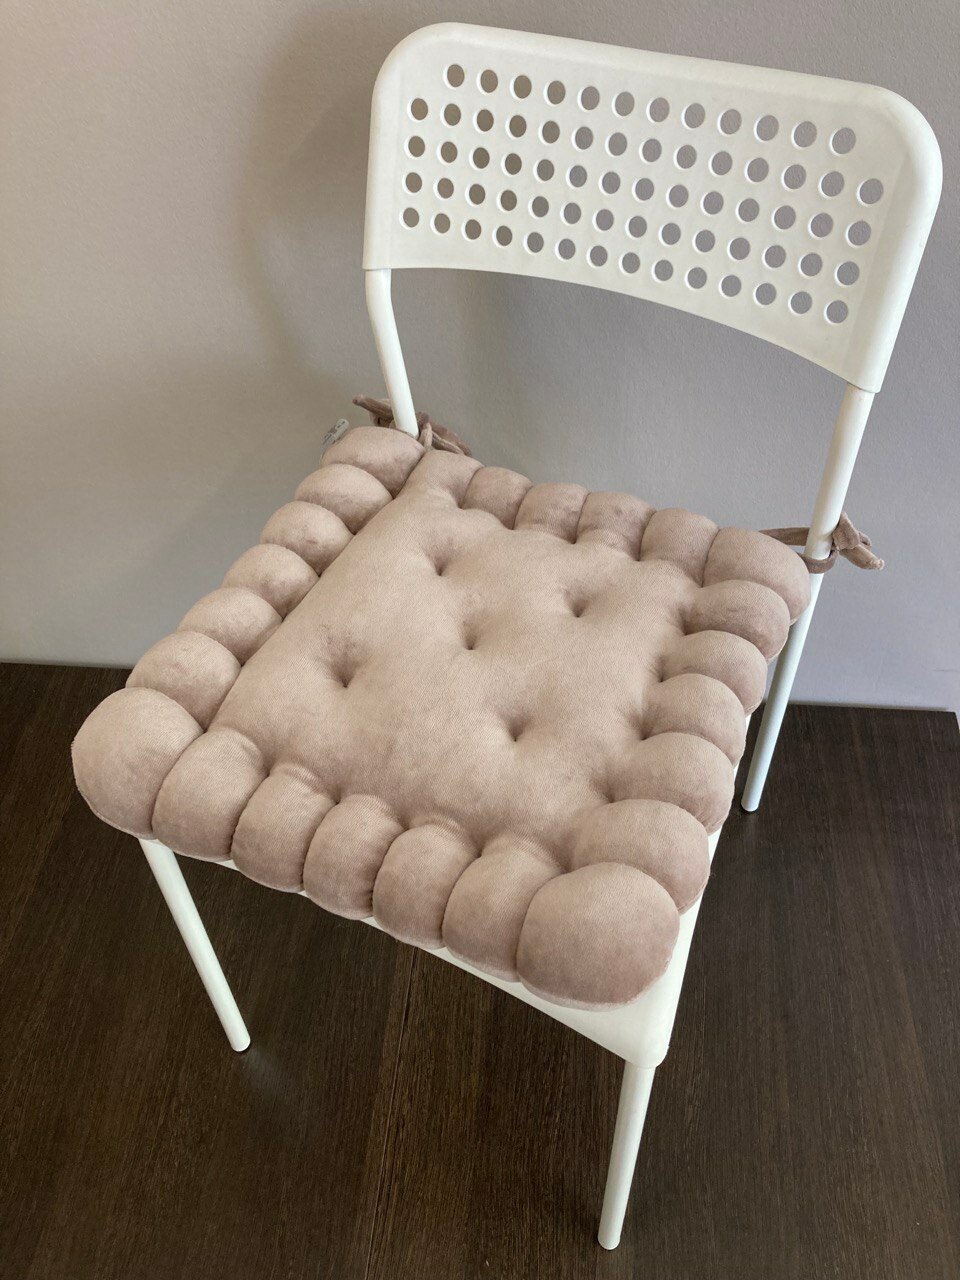 Подушка на стул "Крекер" - сидушка для стула в виде печенья -Baby. Eco. Decor- шоко